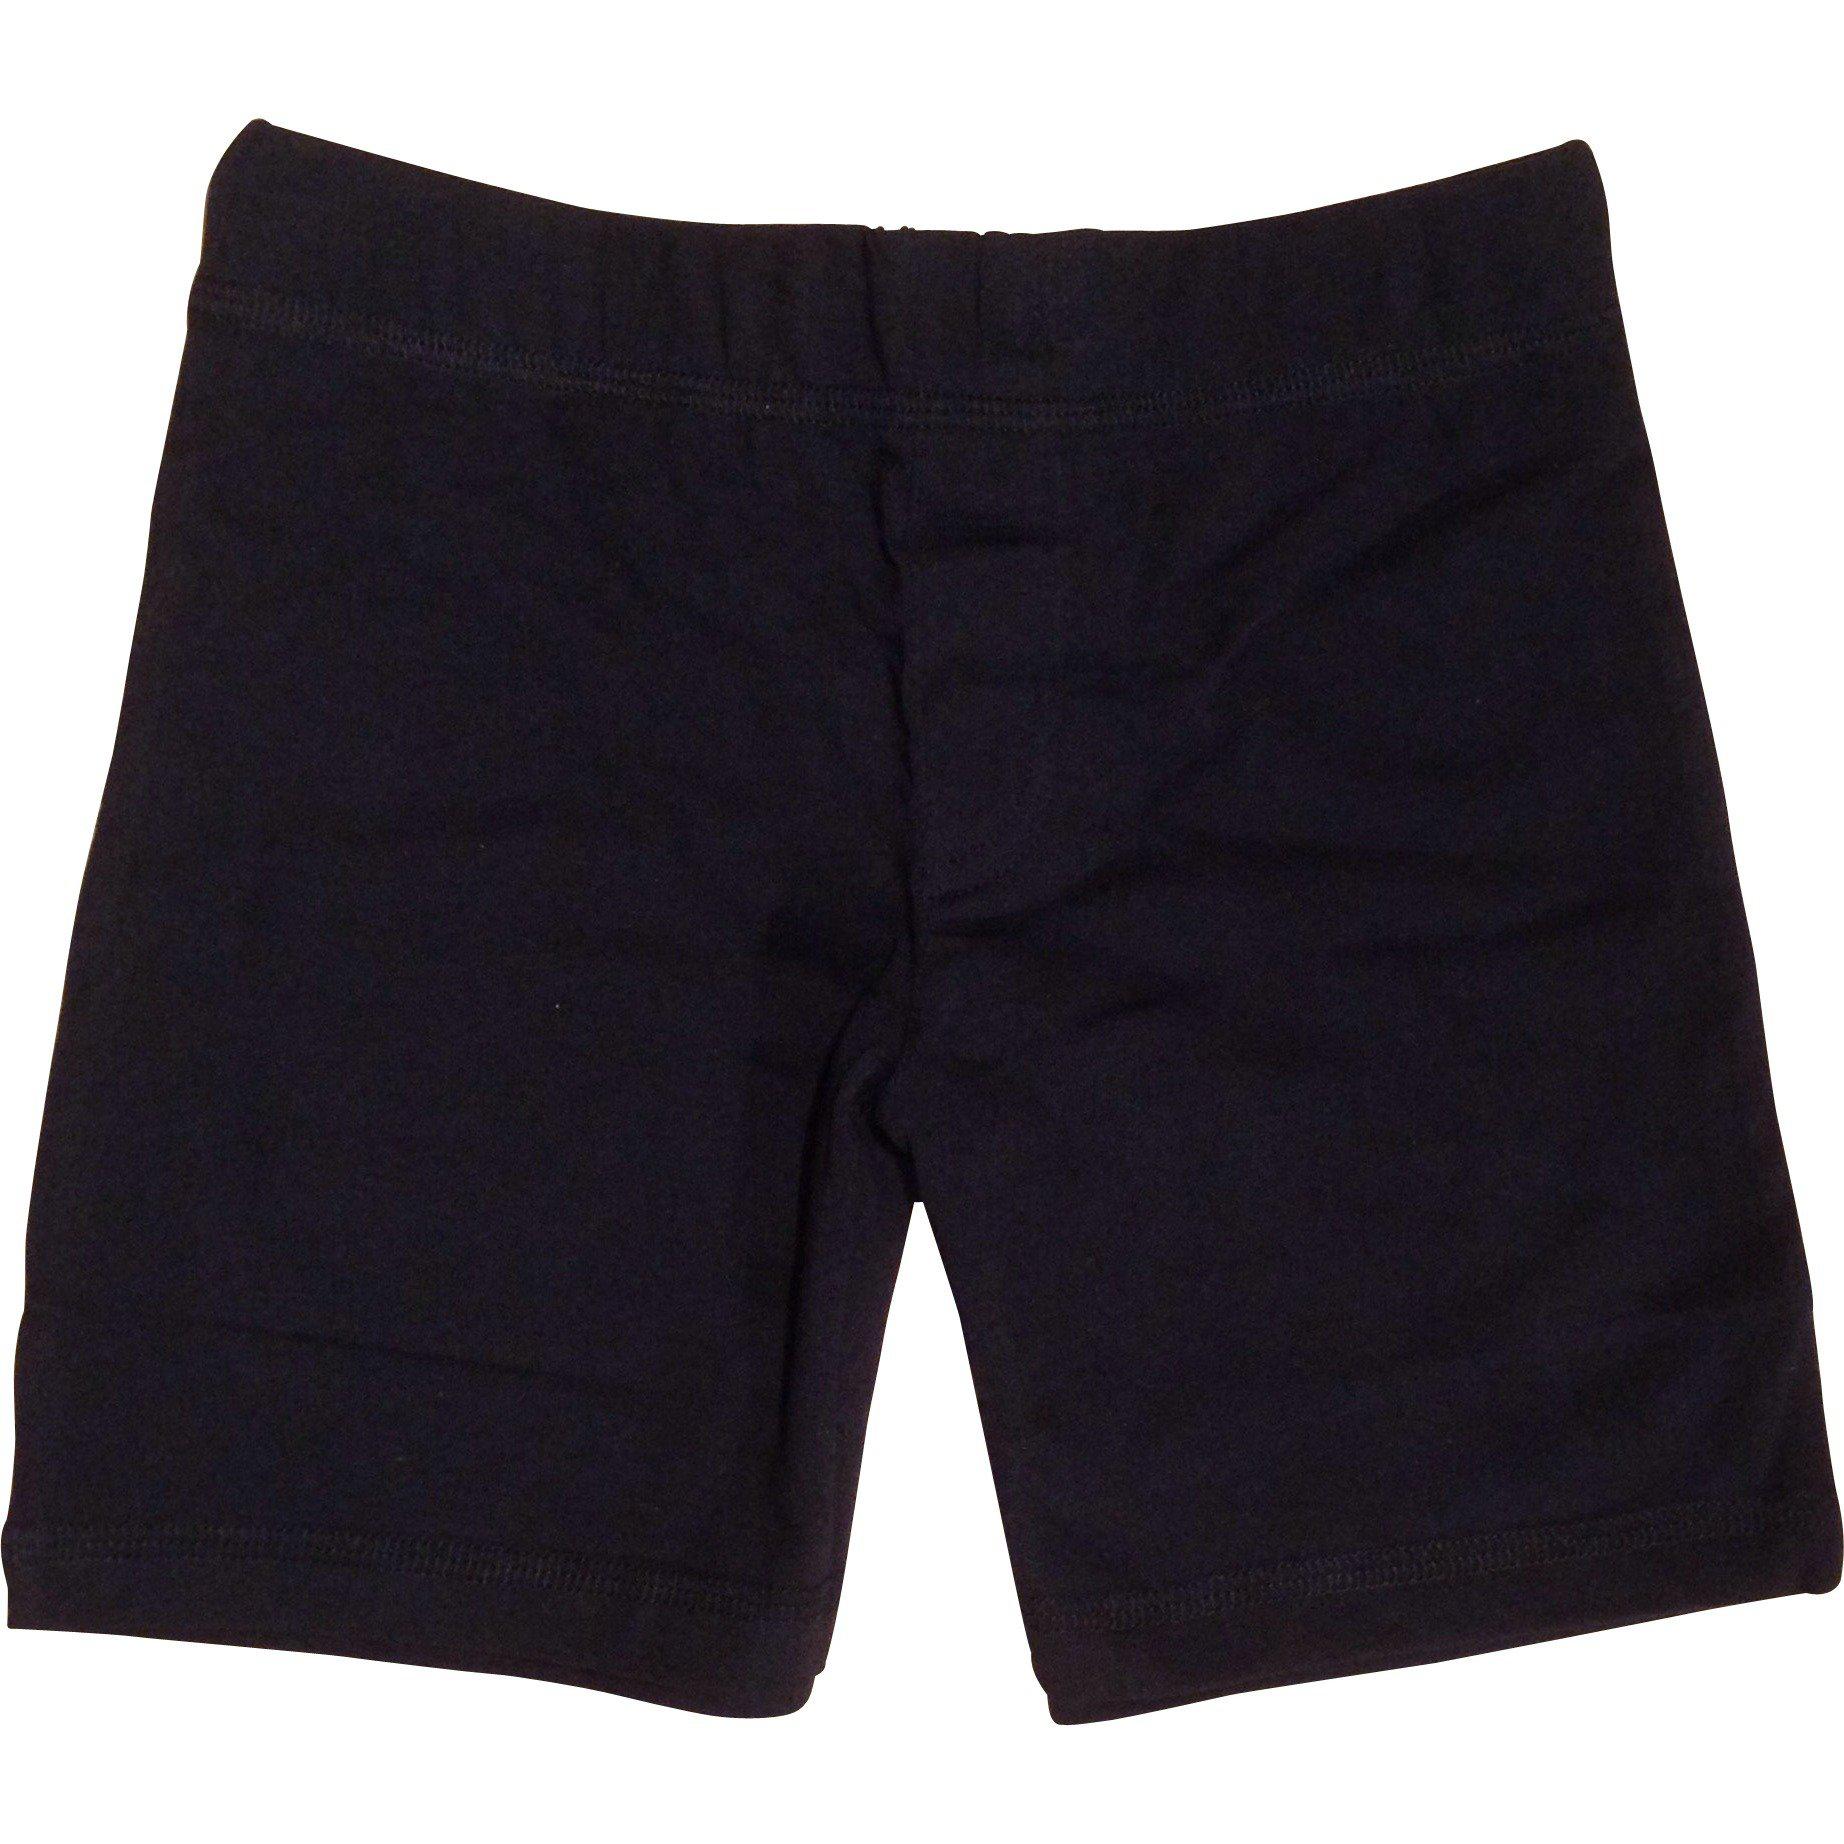 More than a Fling - Black Shorts (1-2 Years)